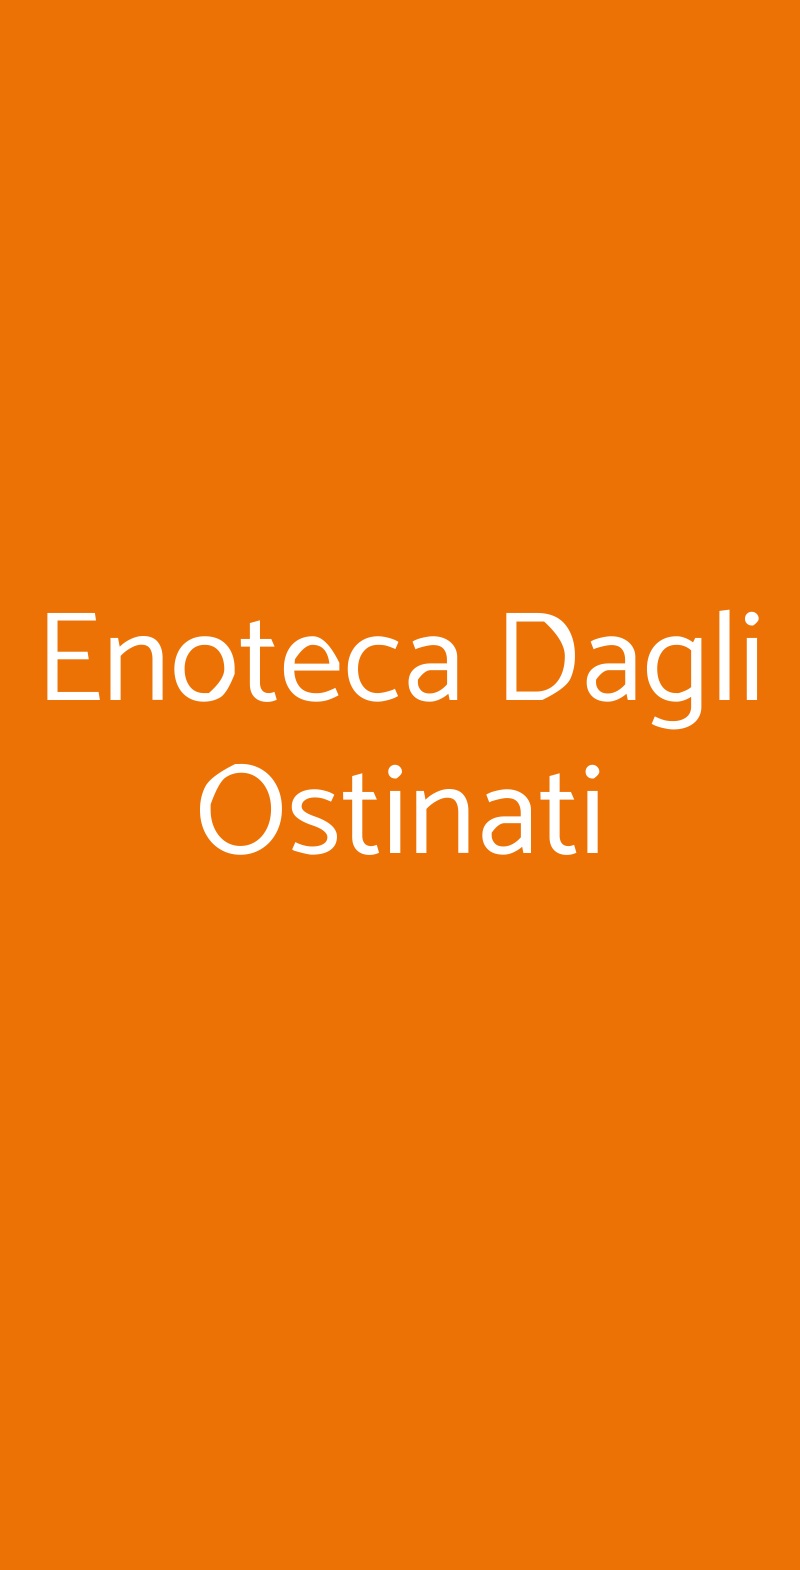 Enoteca Dagli Ostinati Bologna menù 1 pagina